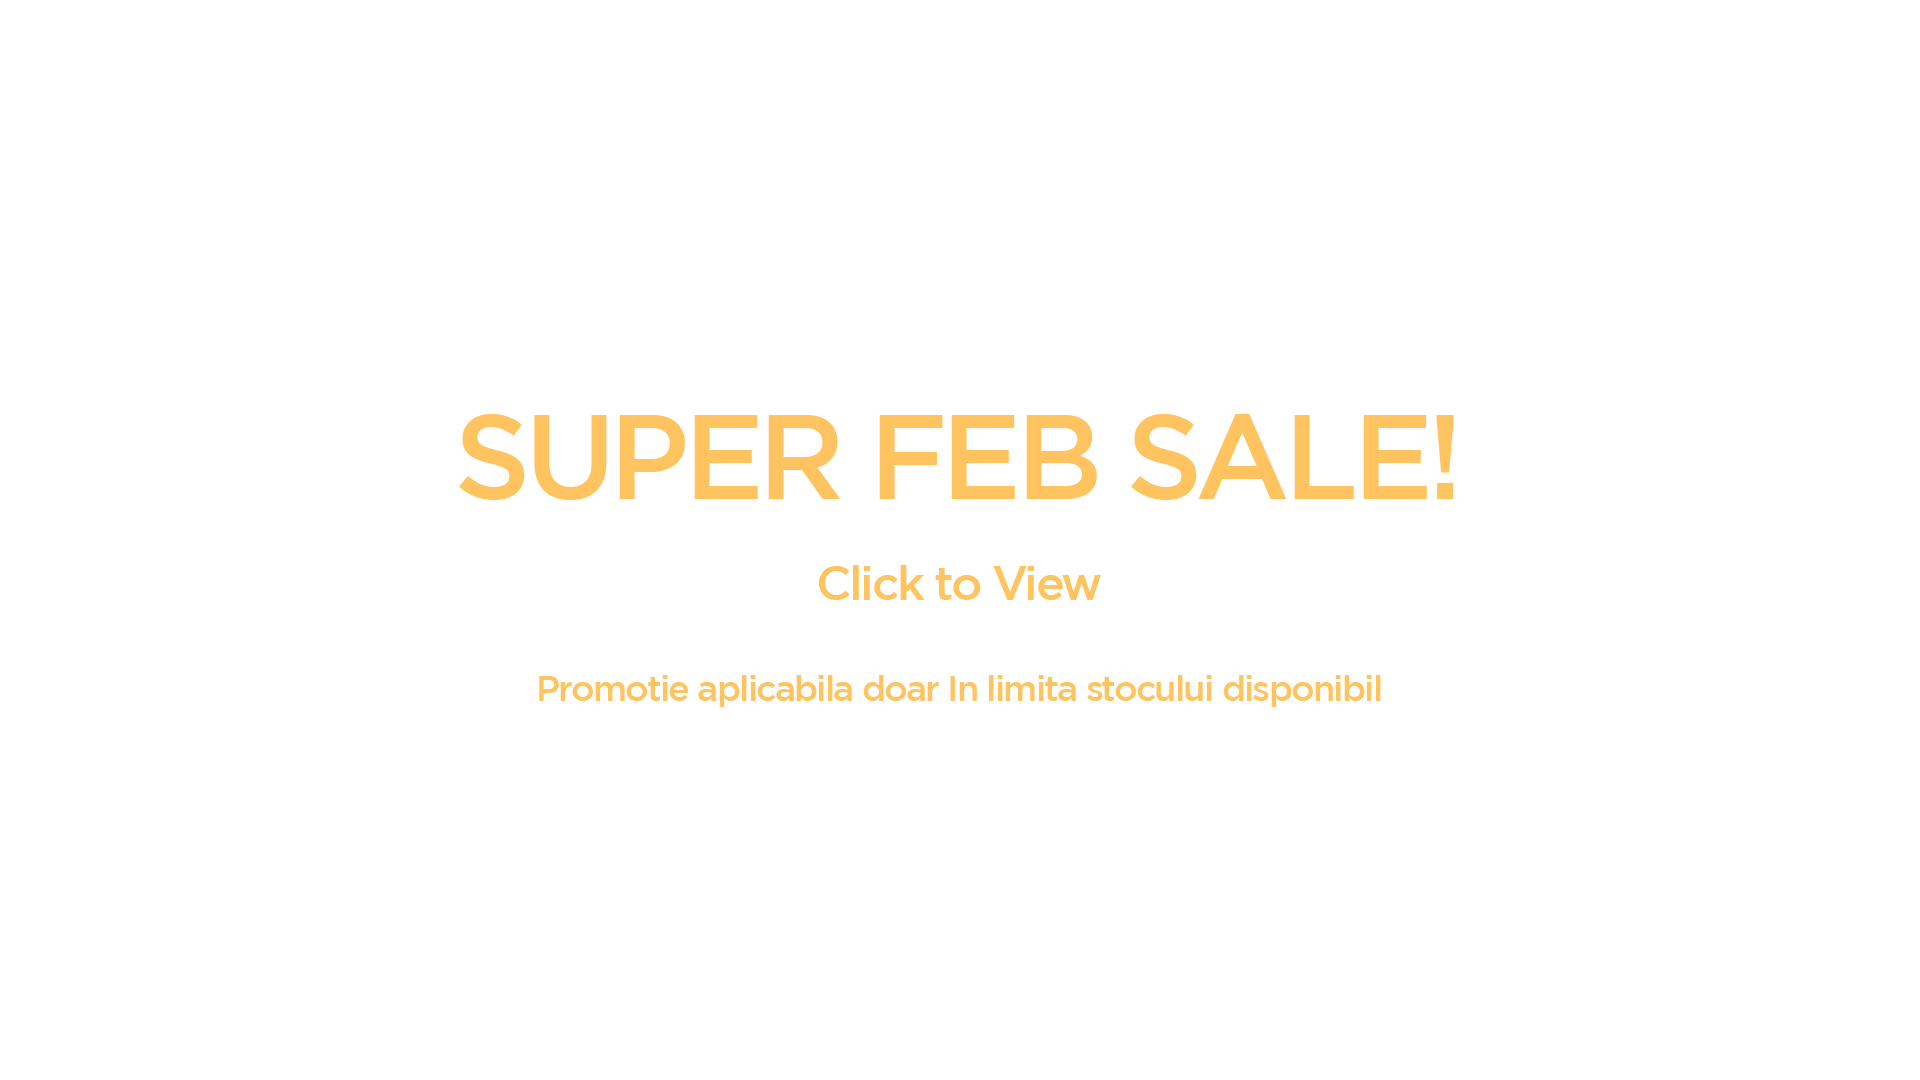 Super February Sale